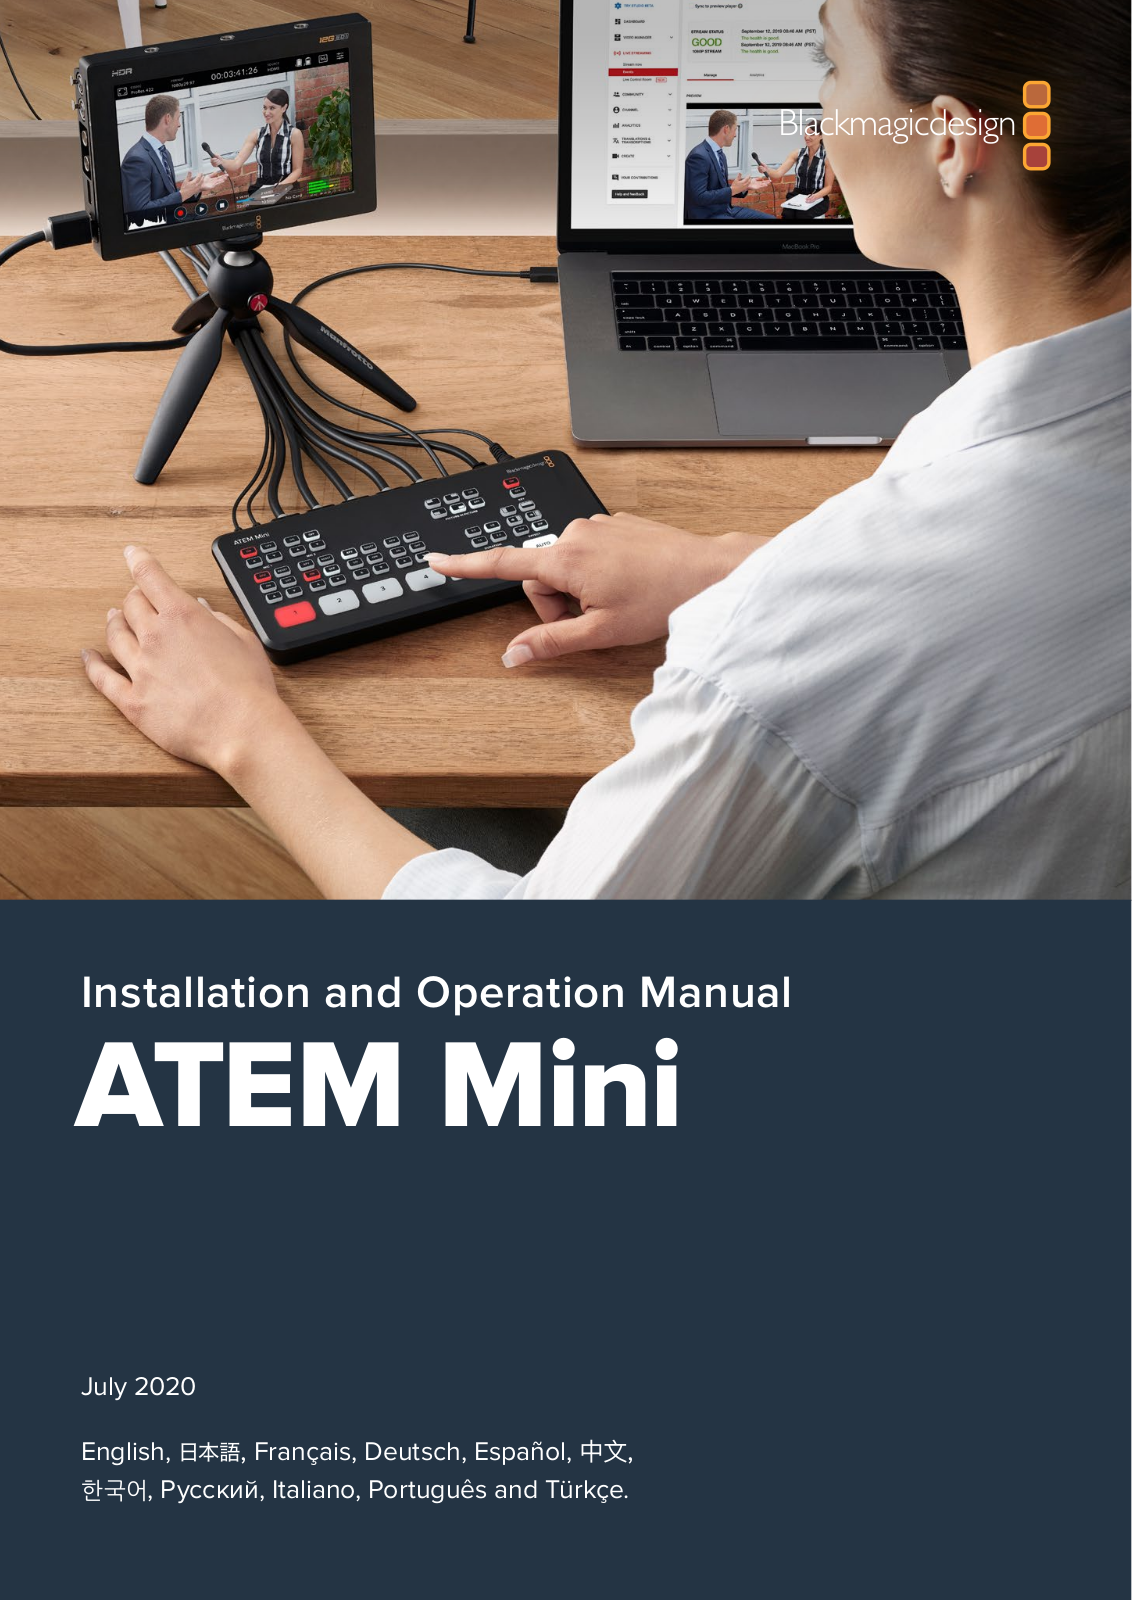 Blackmagic Design ATEM mini Service Manual